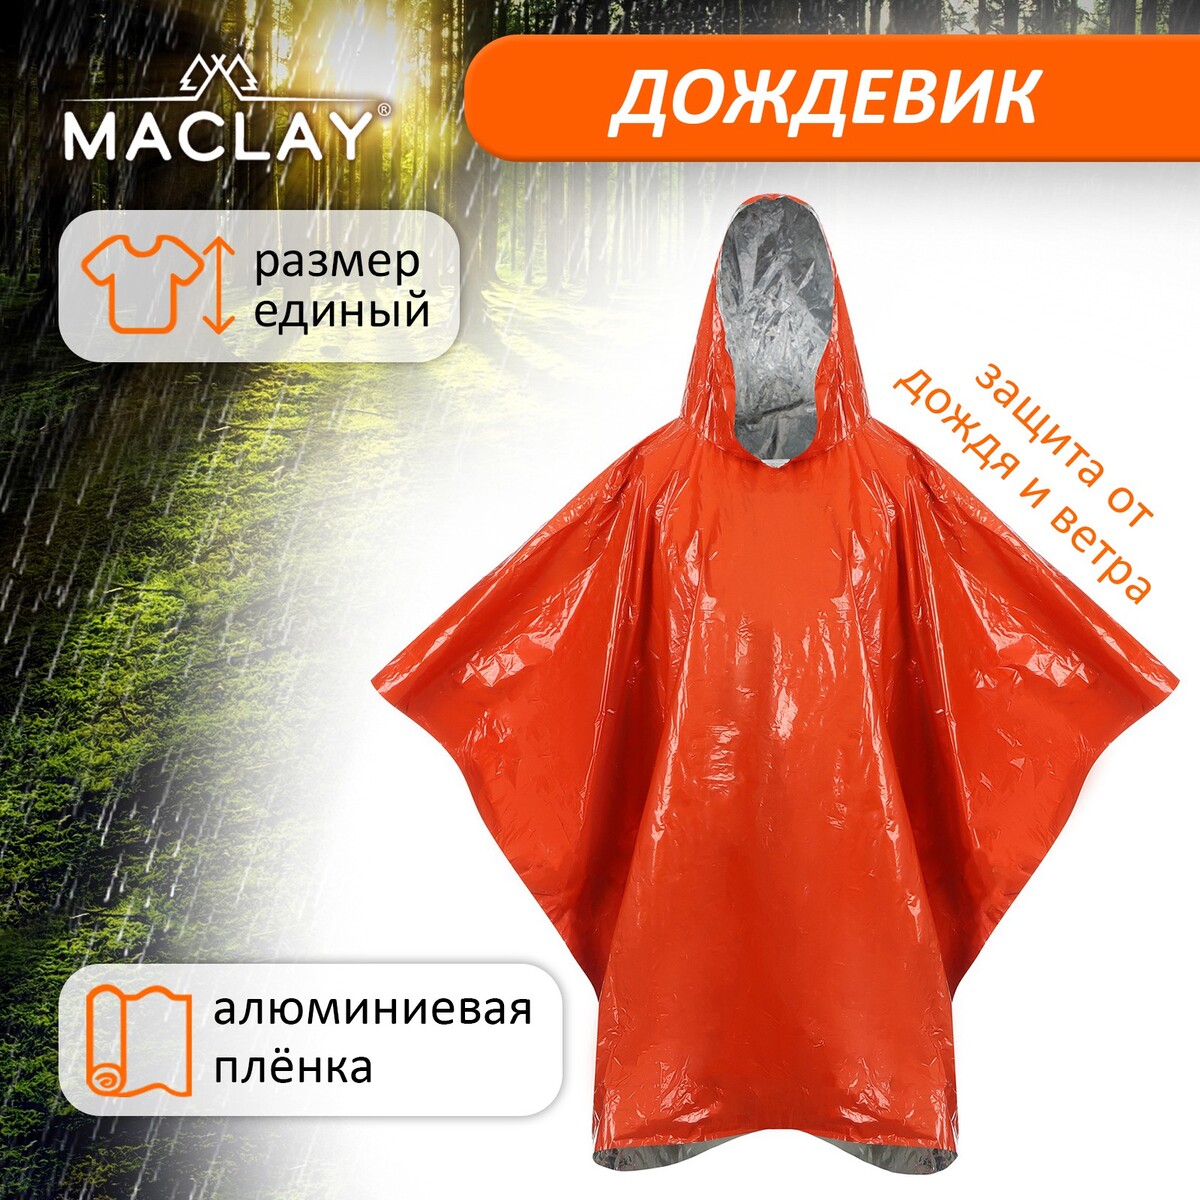 Дождевик maclay, фольгированный, 100х125 см, цвет оранжевый дождевик ruivo чехол от снега на люльку